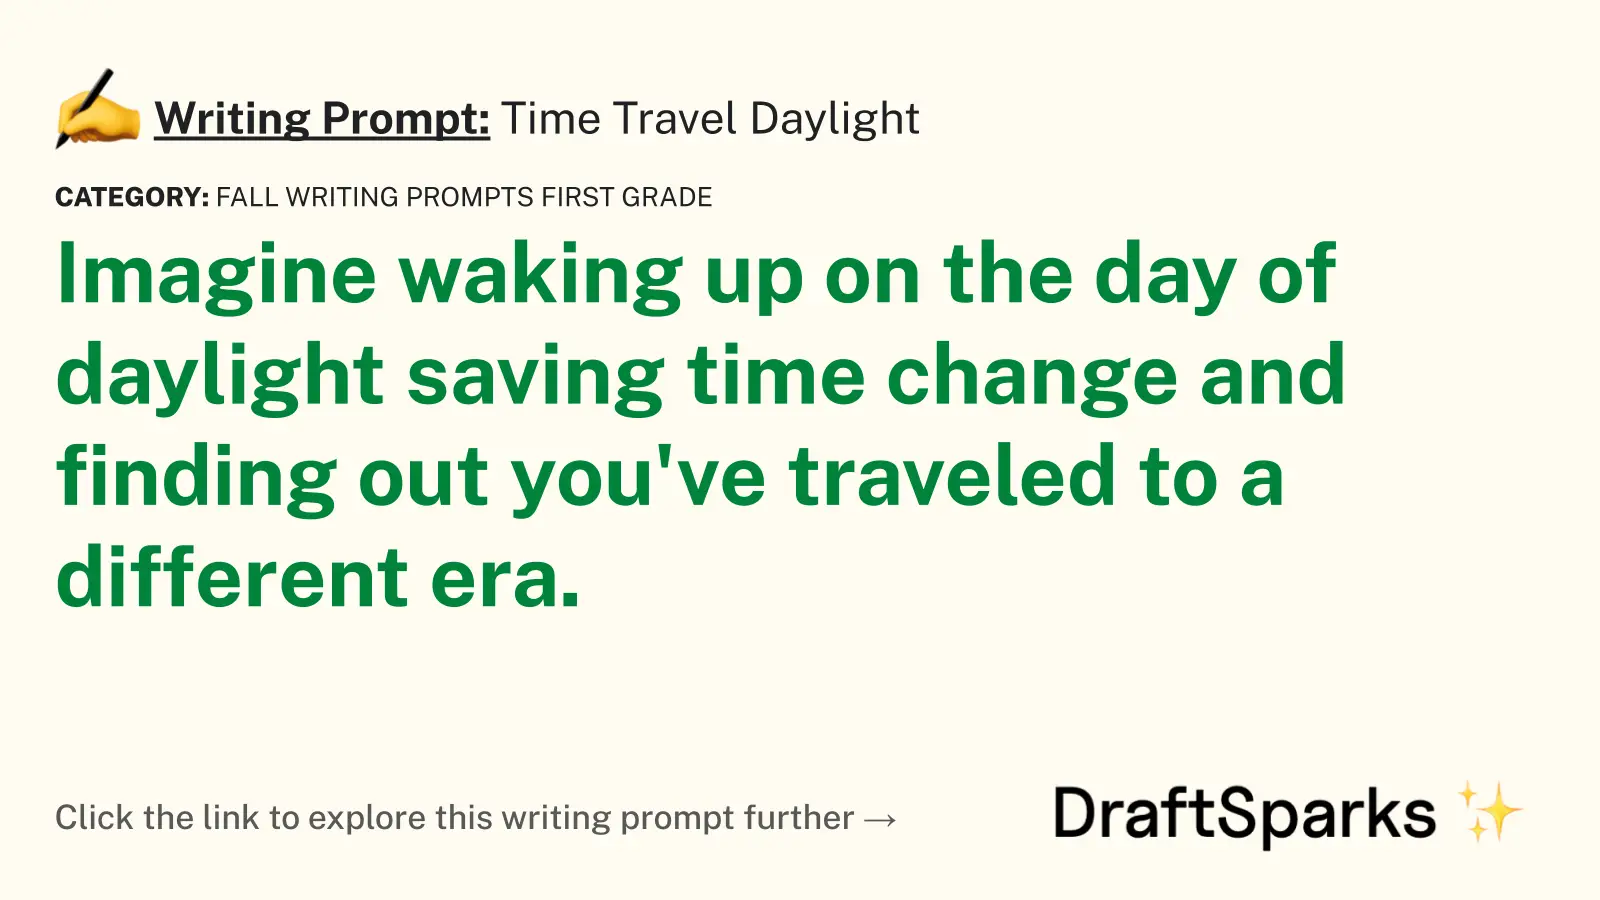 Time Travel Daylight